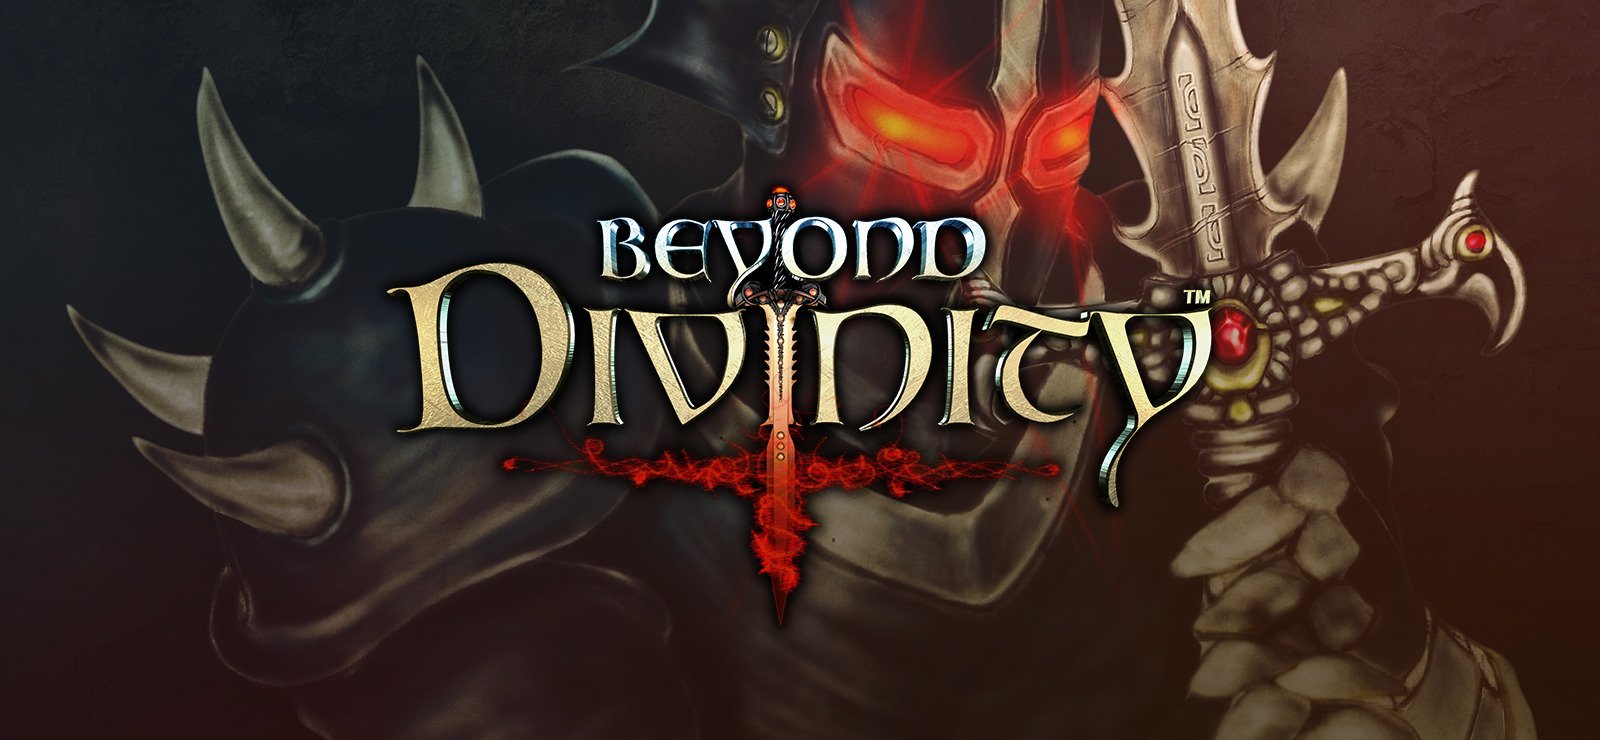 Beyond Divinity 6